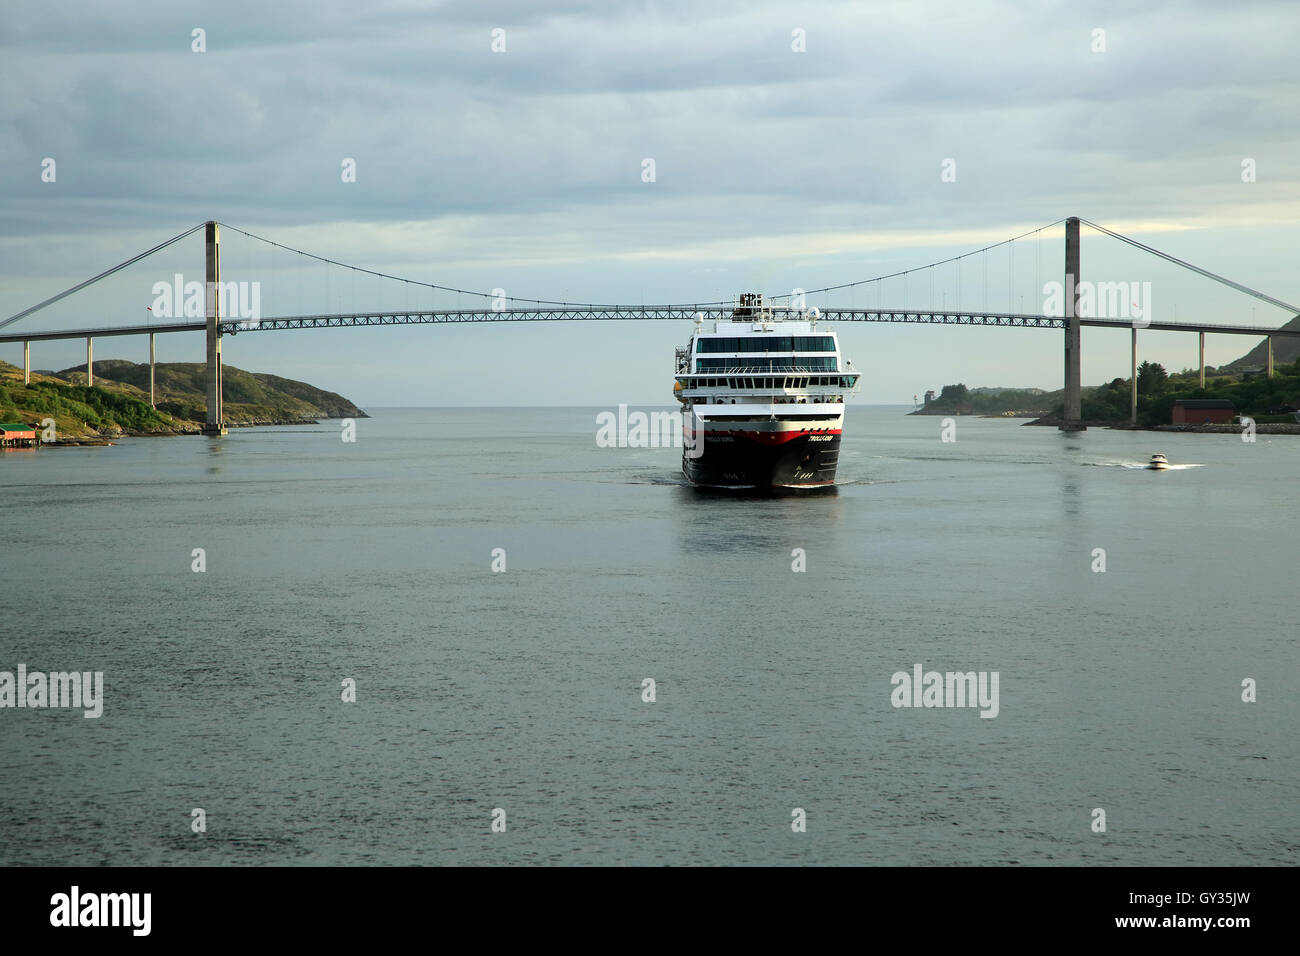 Hurtigruten ship 'Trollfjord' arriving at port of Rorvik, Norway with road bridge Stock Photo